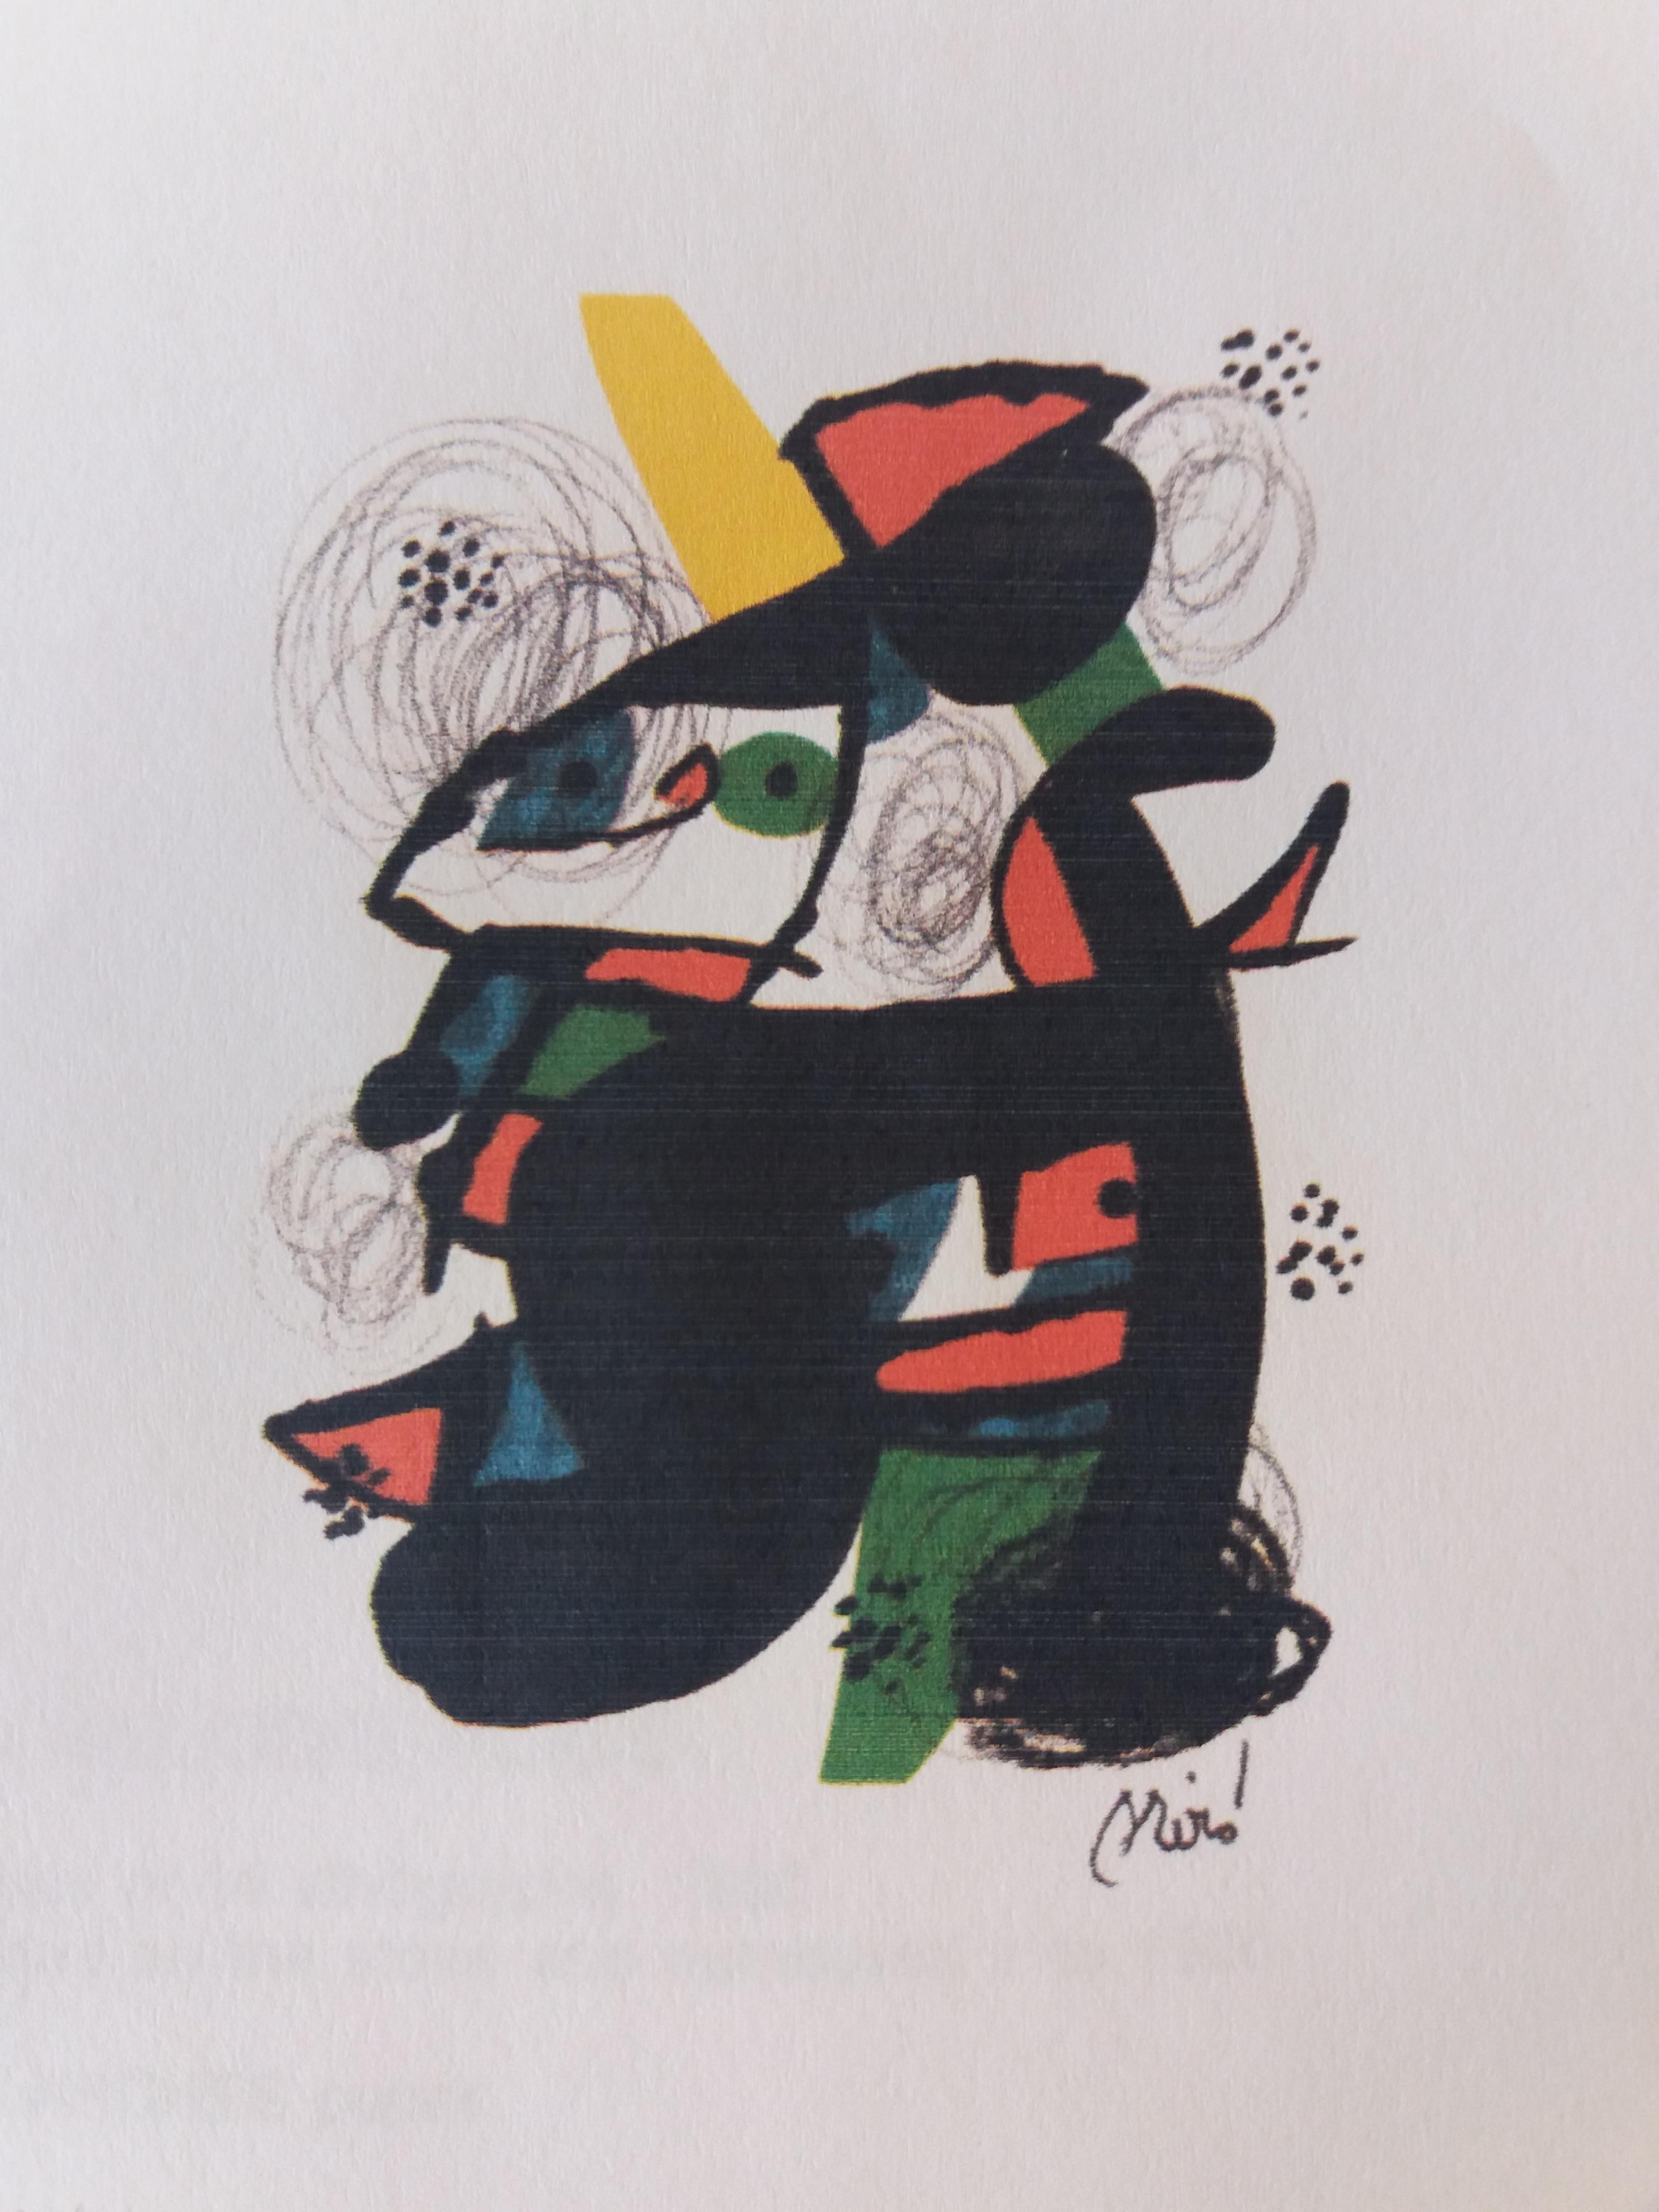 Abstract Print Joan Miró - Miro  melodie acide. peinture lithographique originale